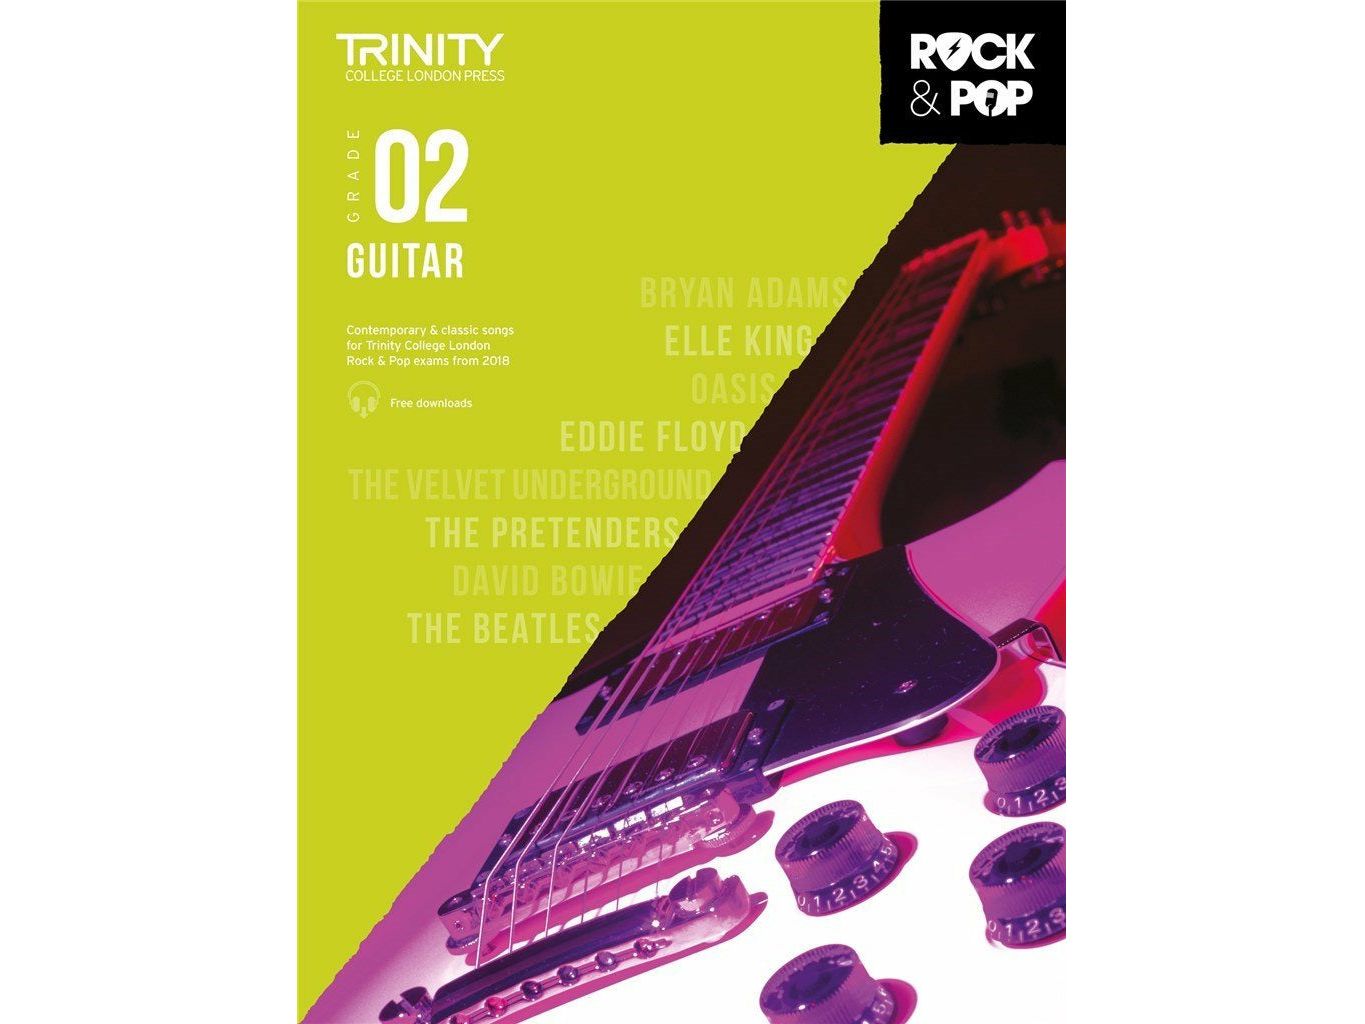 Trinity Rock & Pop 2018 Guitar Grade 2